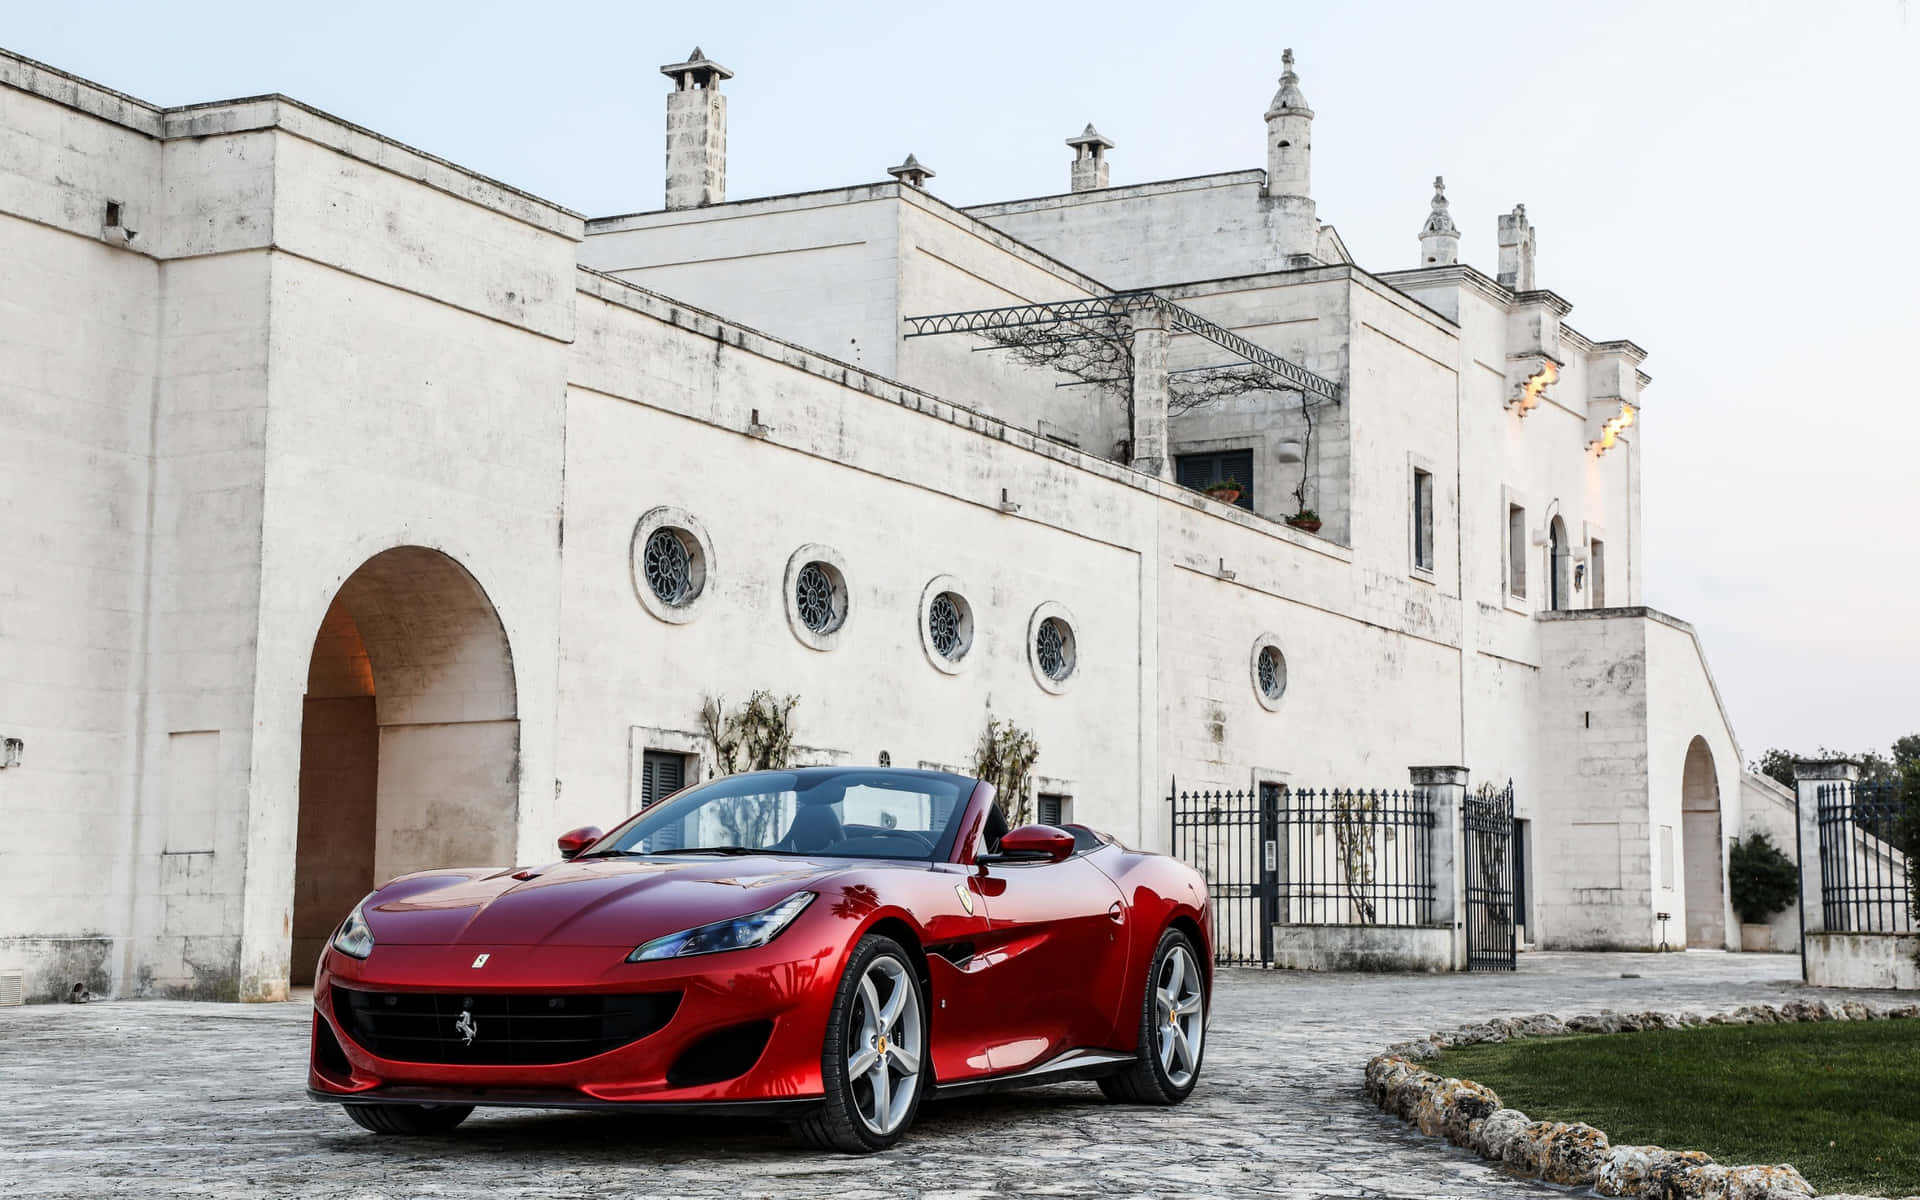 Stunning Ferrari Portofino in Action Wallpaper